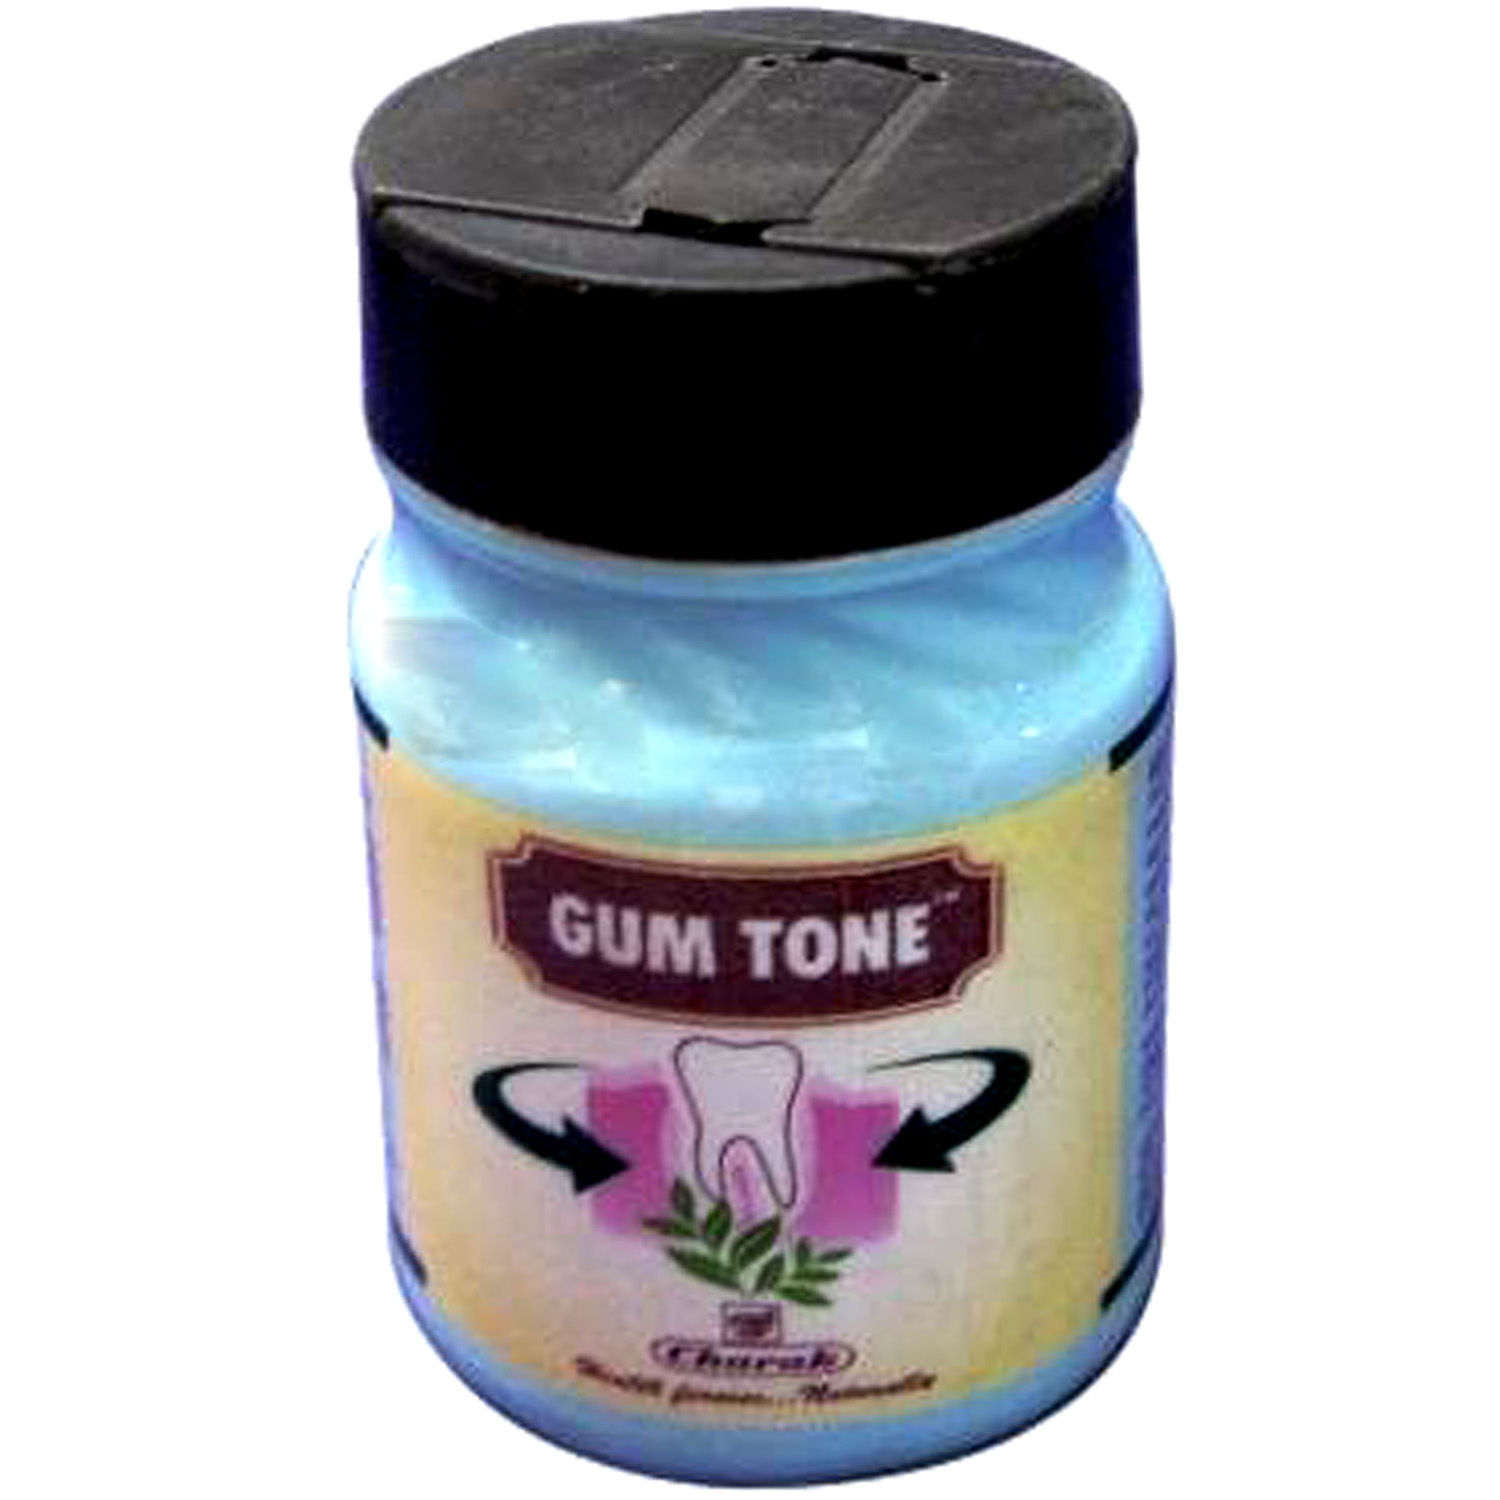 Gum Tone Powder, 40 gm, Pack of 1 